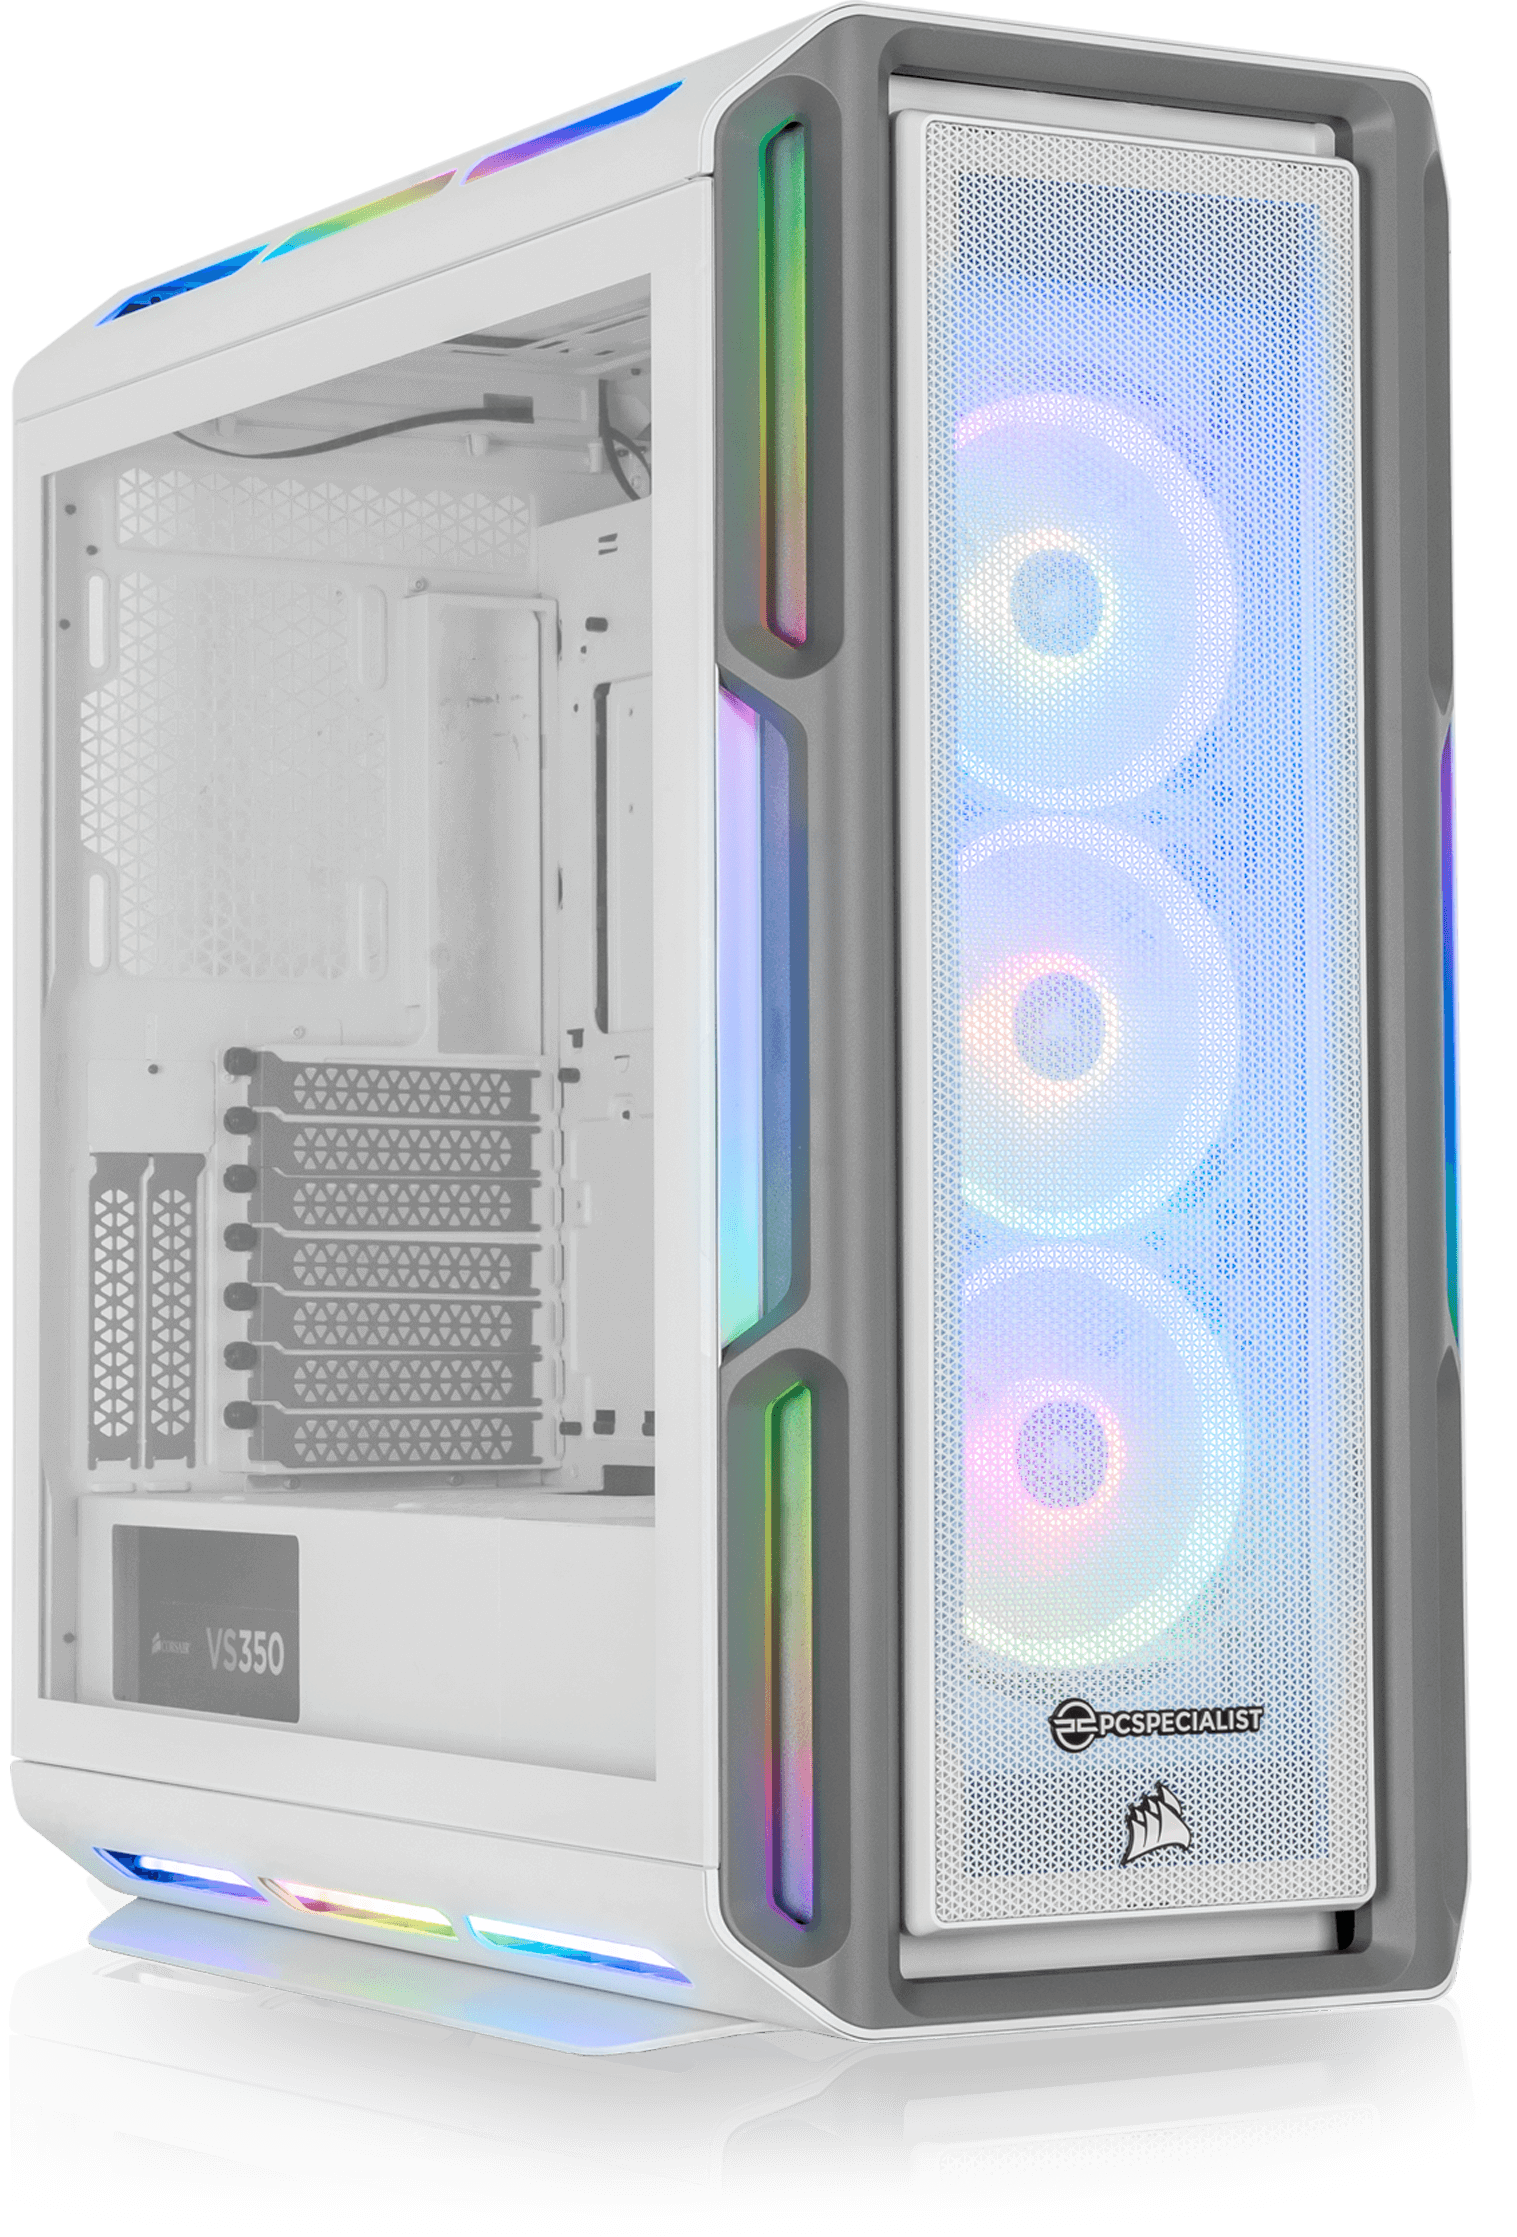 PCSPECIALIST - Konfigurer Luna Ultra White Gaming PC, så den passer dine krav.